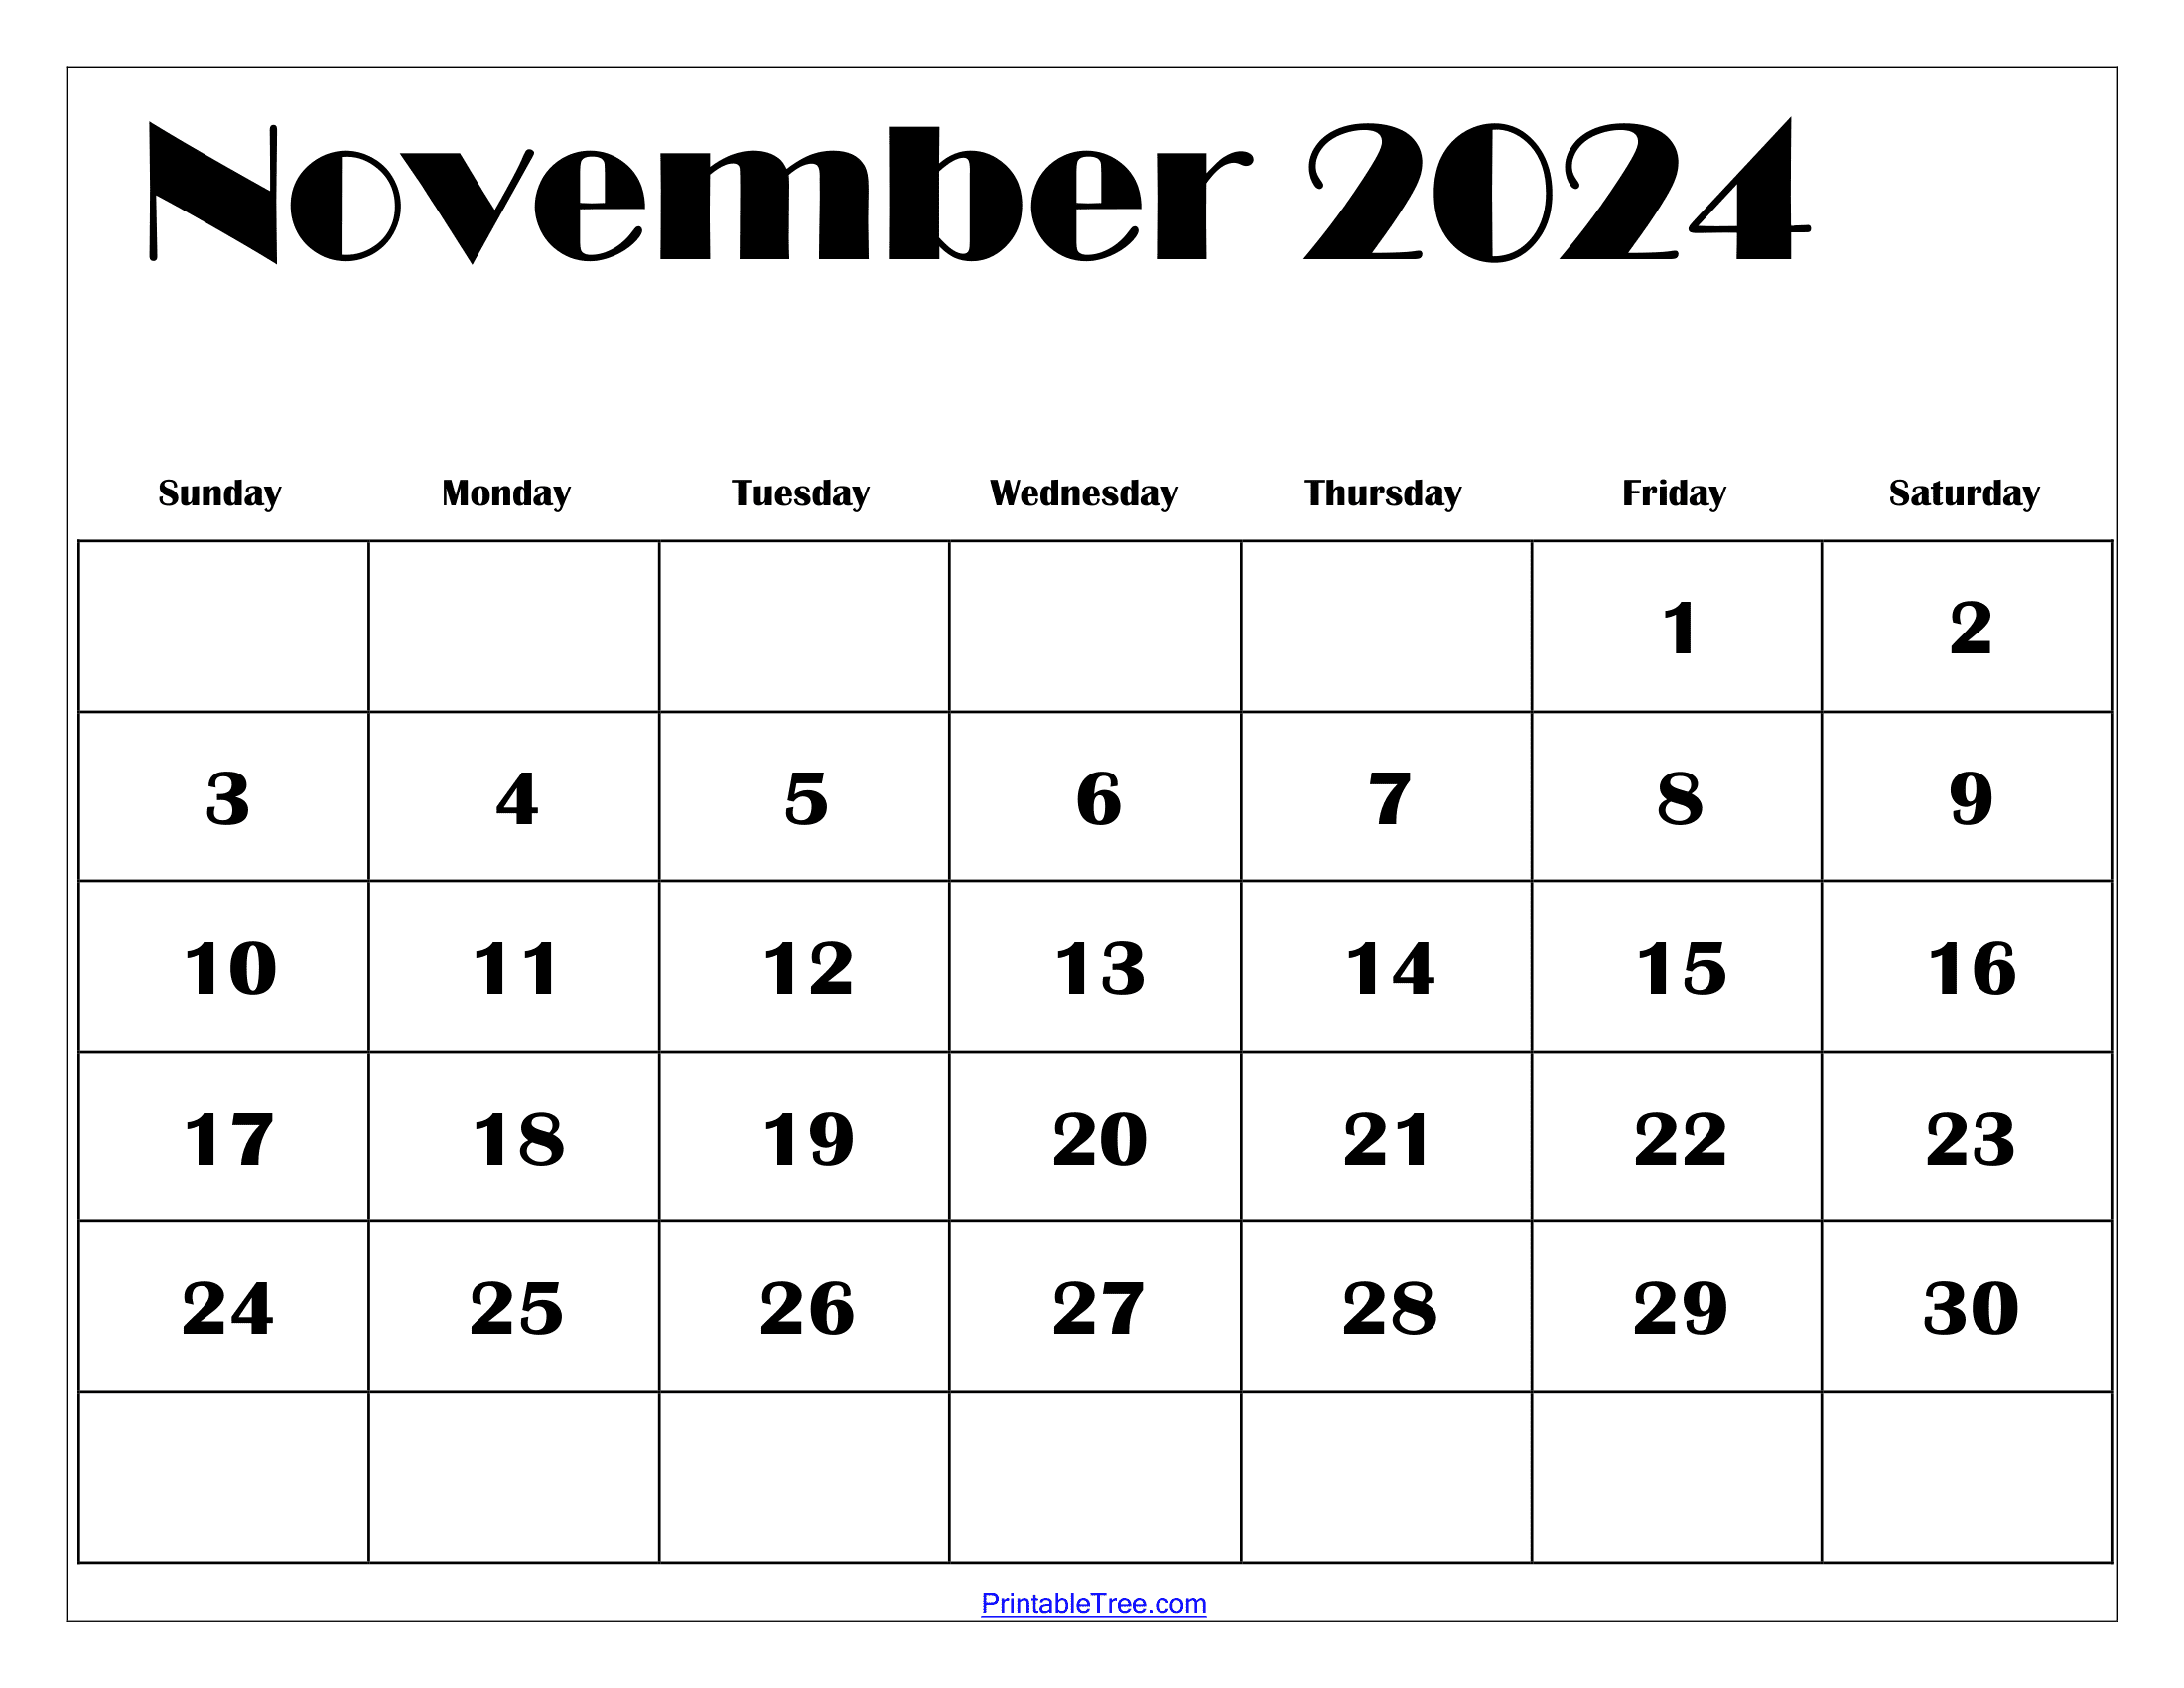 November 2024 Calendar Printable Pdf Template With Holidays in Free Printable Calendar 2024 November December Christmas